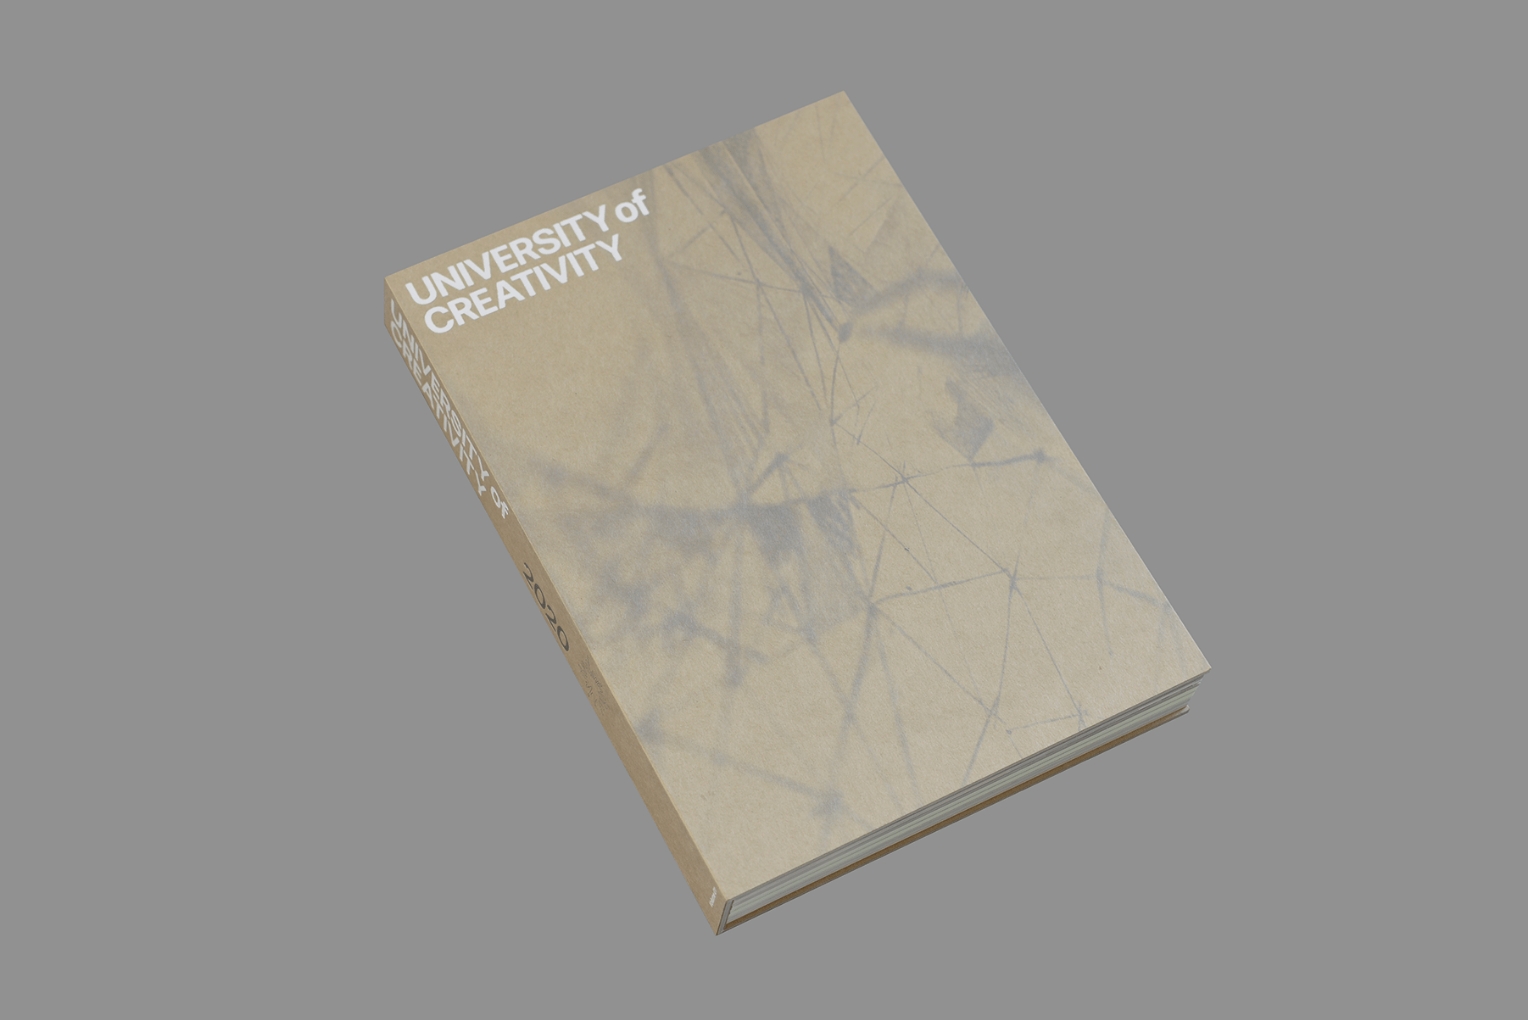 UNIVERSITY of CREATIVITY vol.01